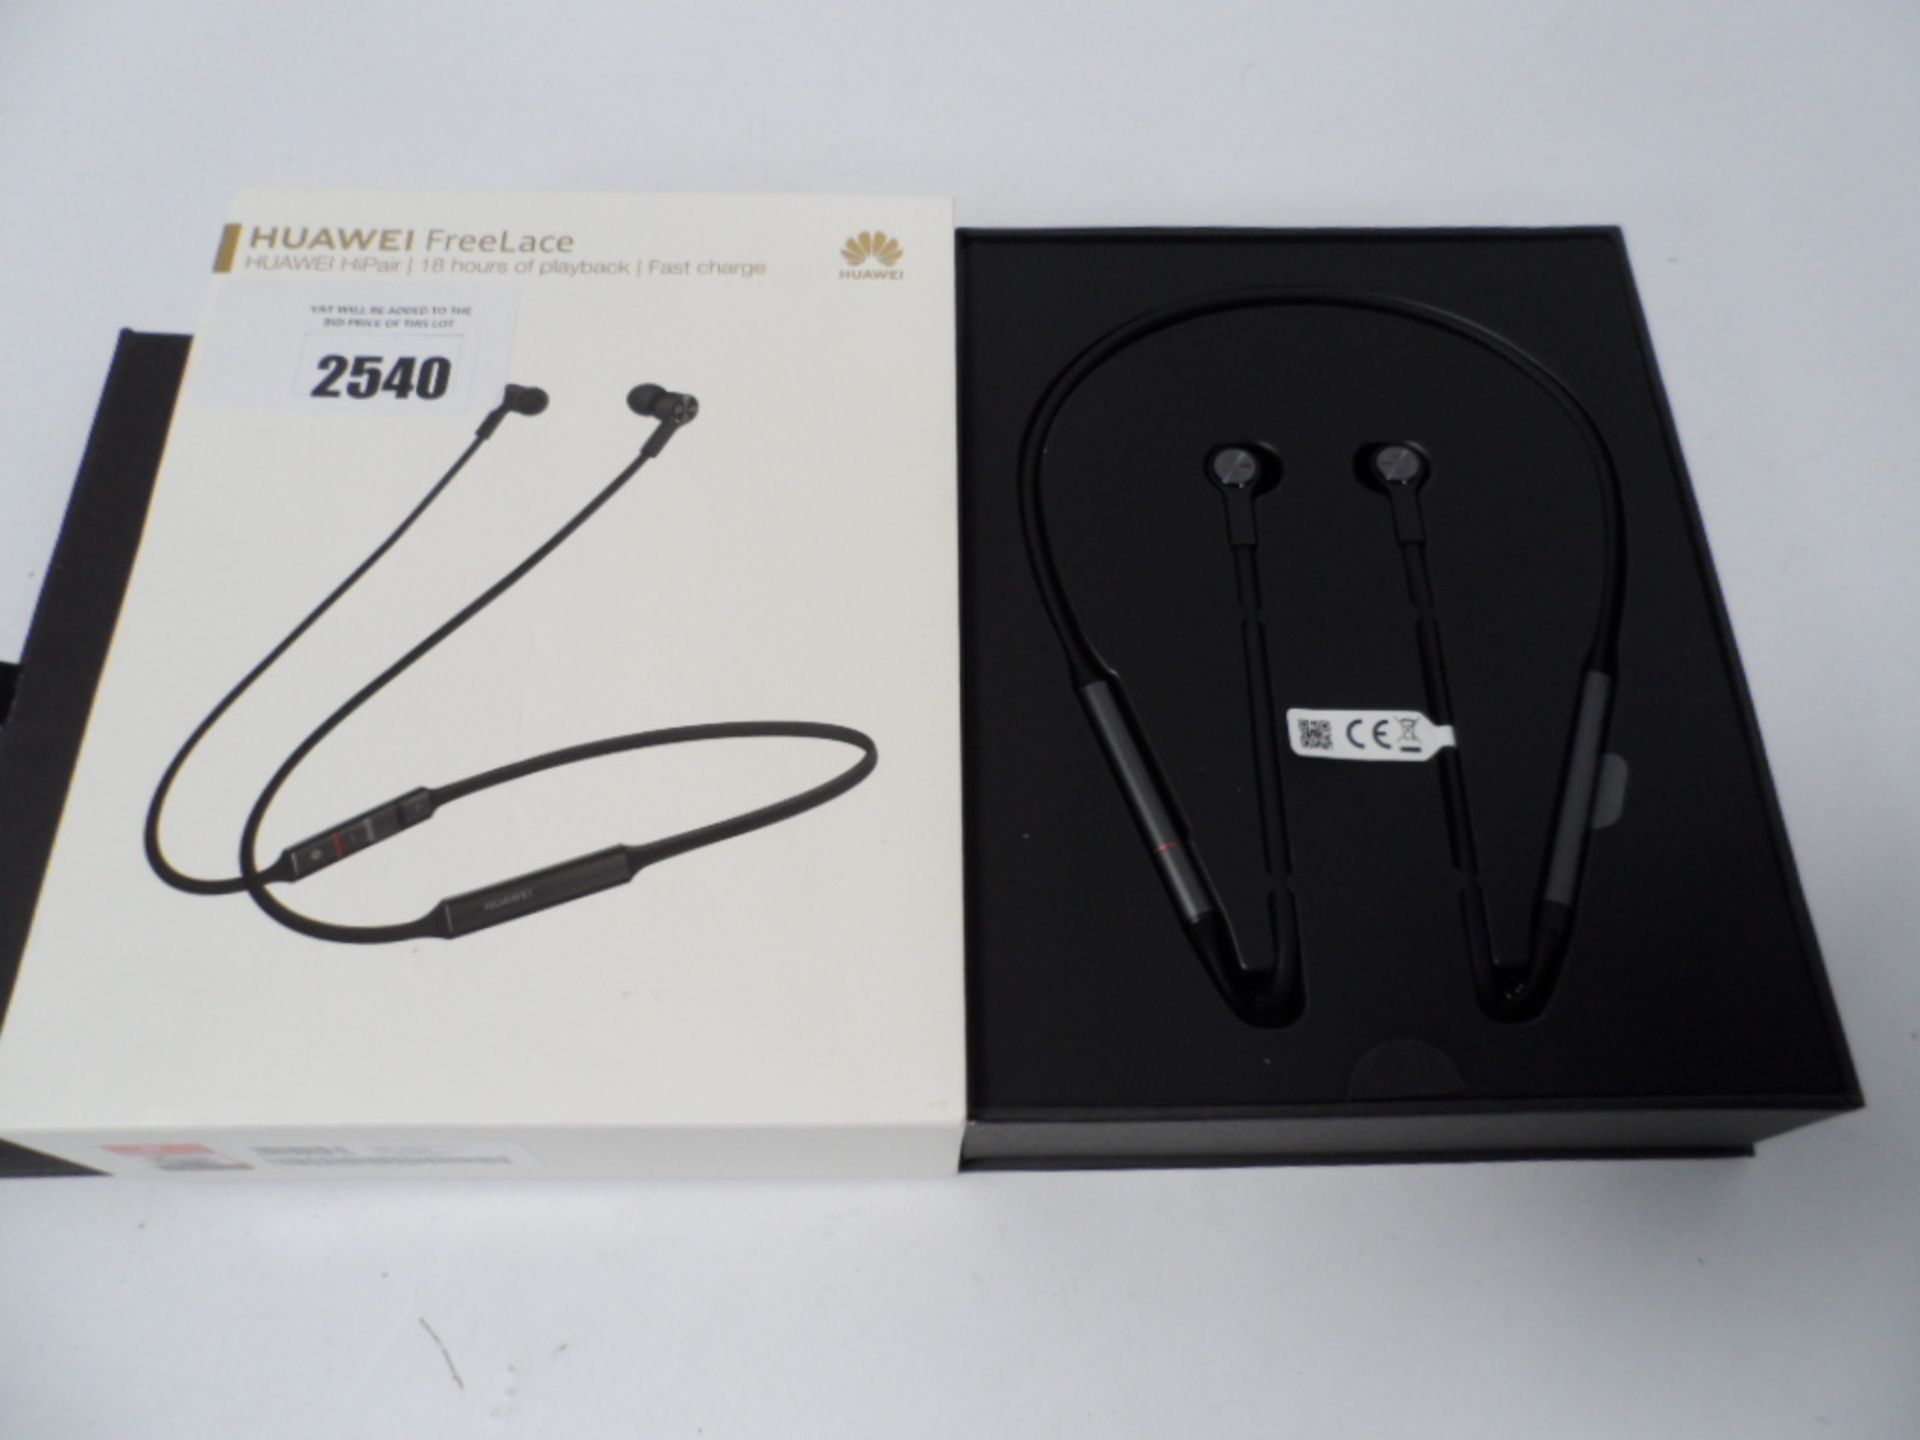 Huawei Freelace earphones, boxed.